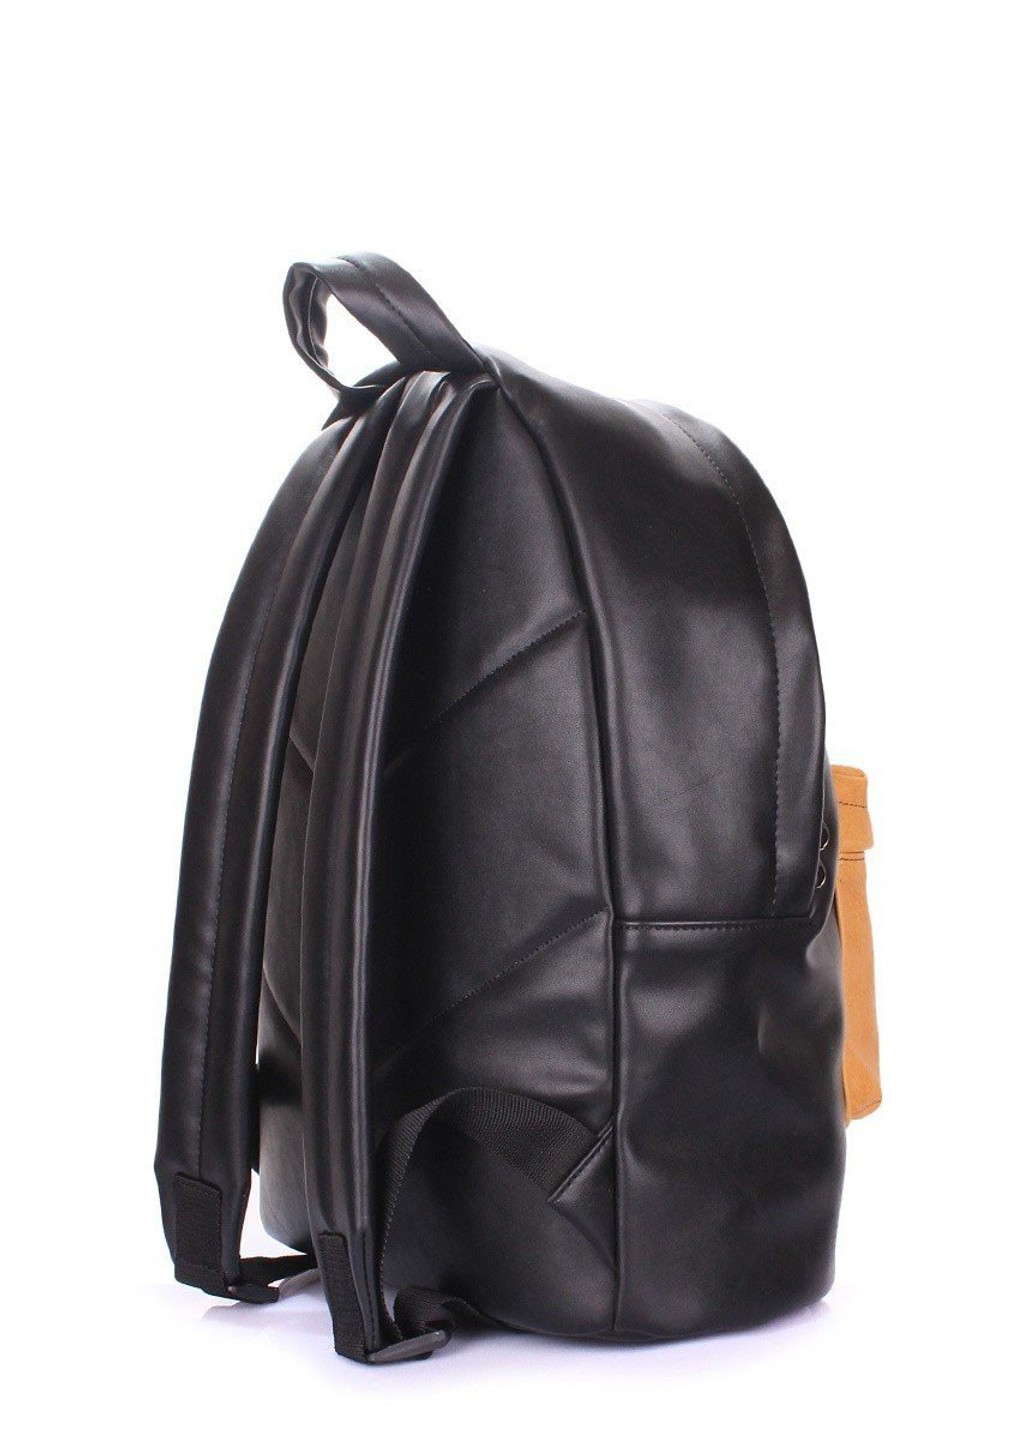 Женский рюкзак из кожзама backpack-pu-black-orange PoolParty (276456897)